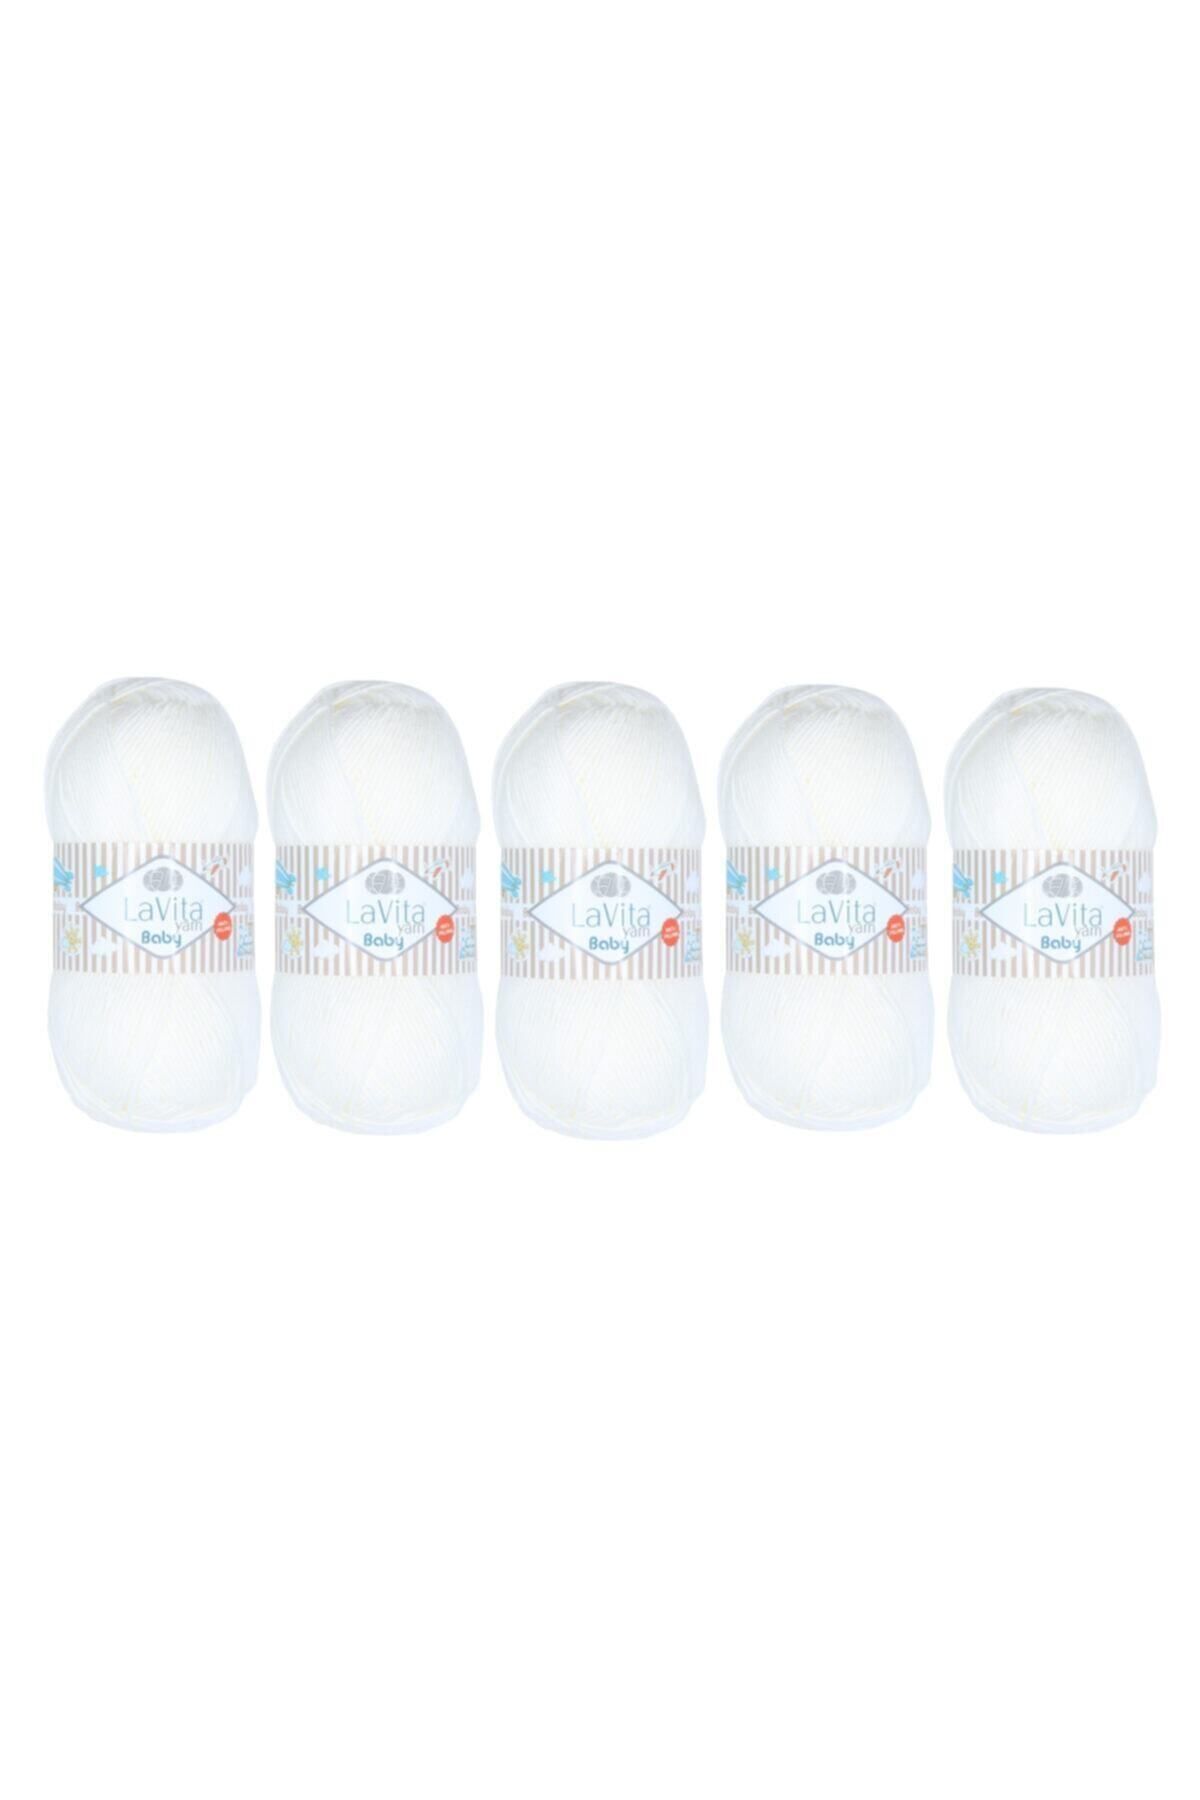 LaVita Yarn Baby - 1002 Beyaz 5'li Paket - Anti Pilling - Örgü Iplik